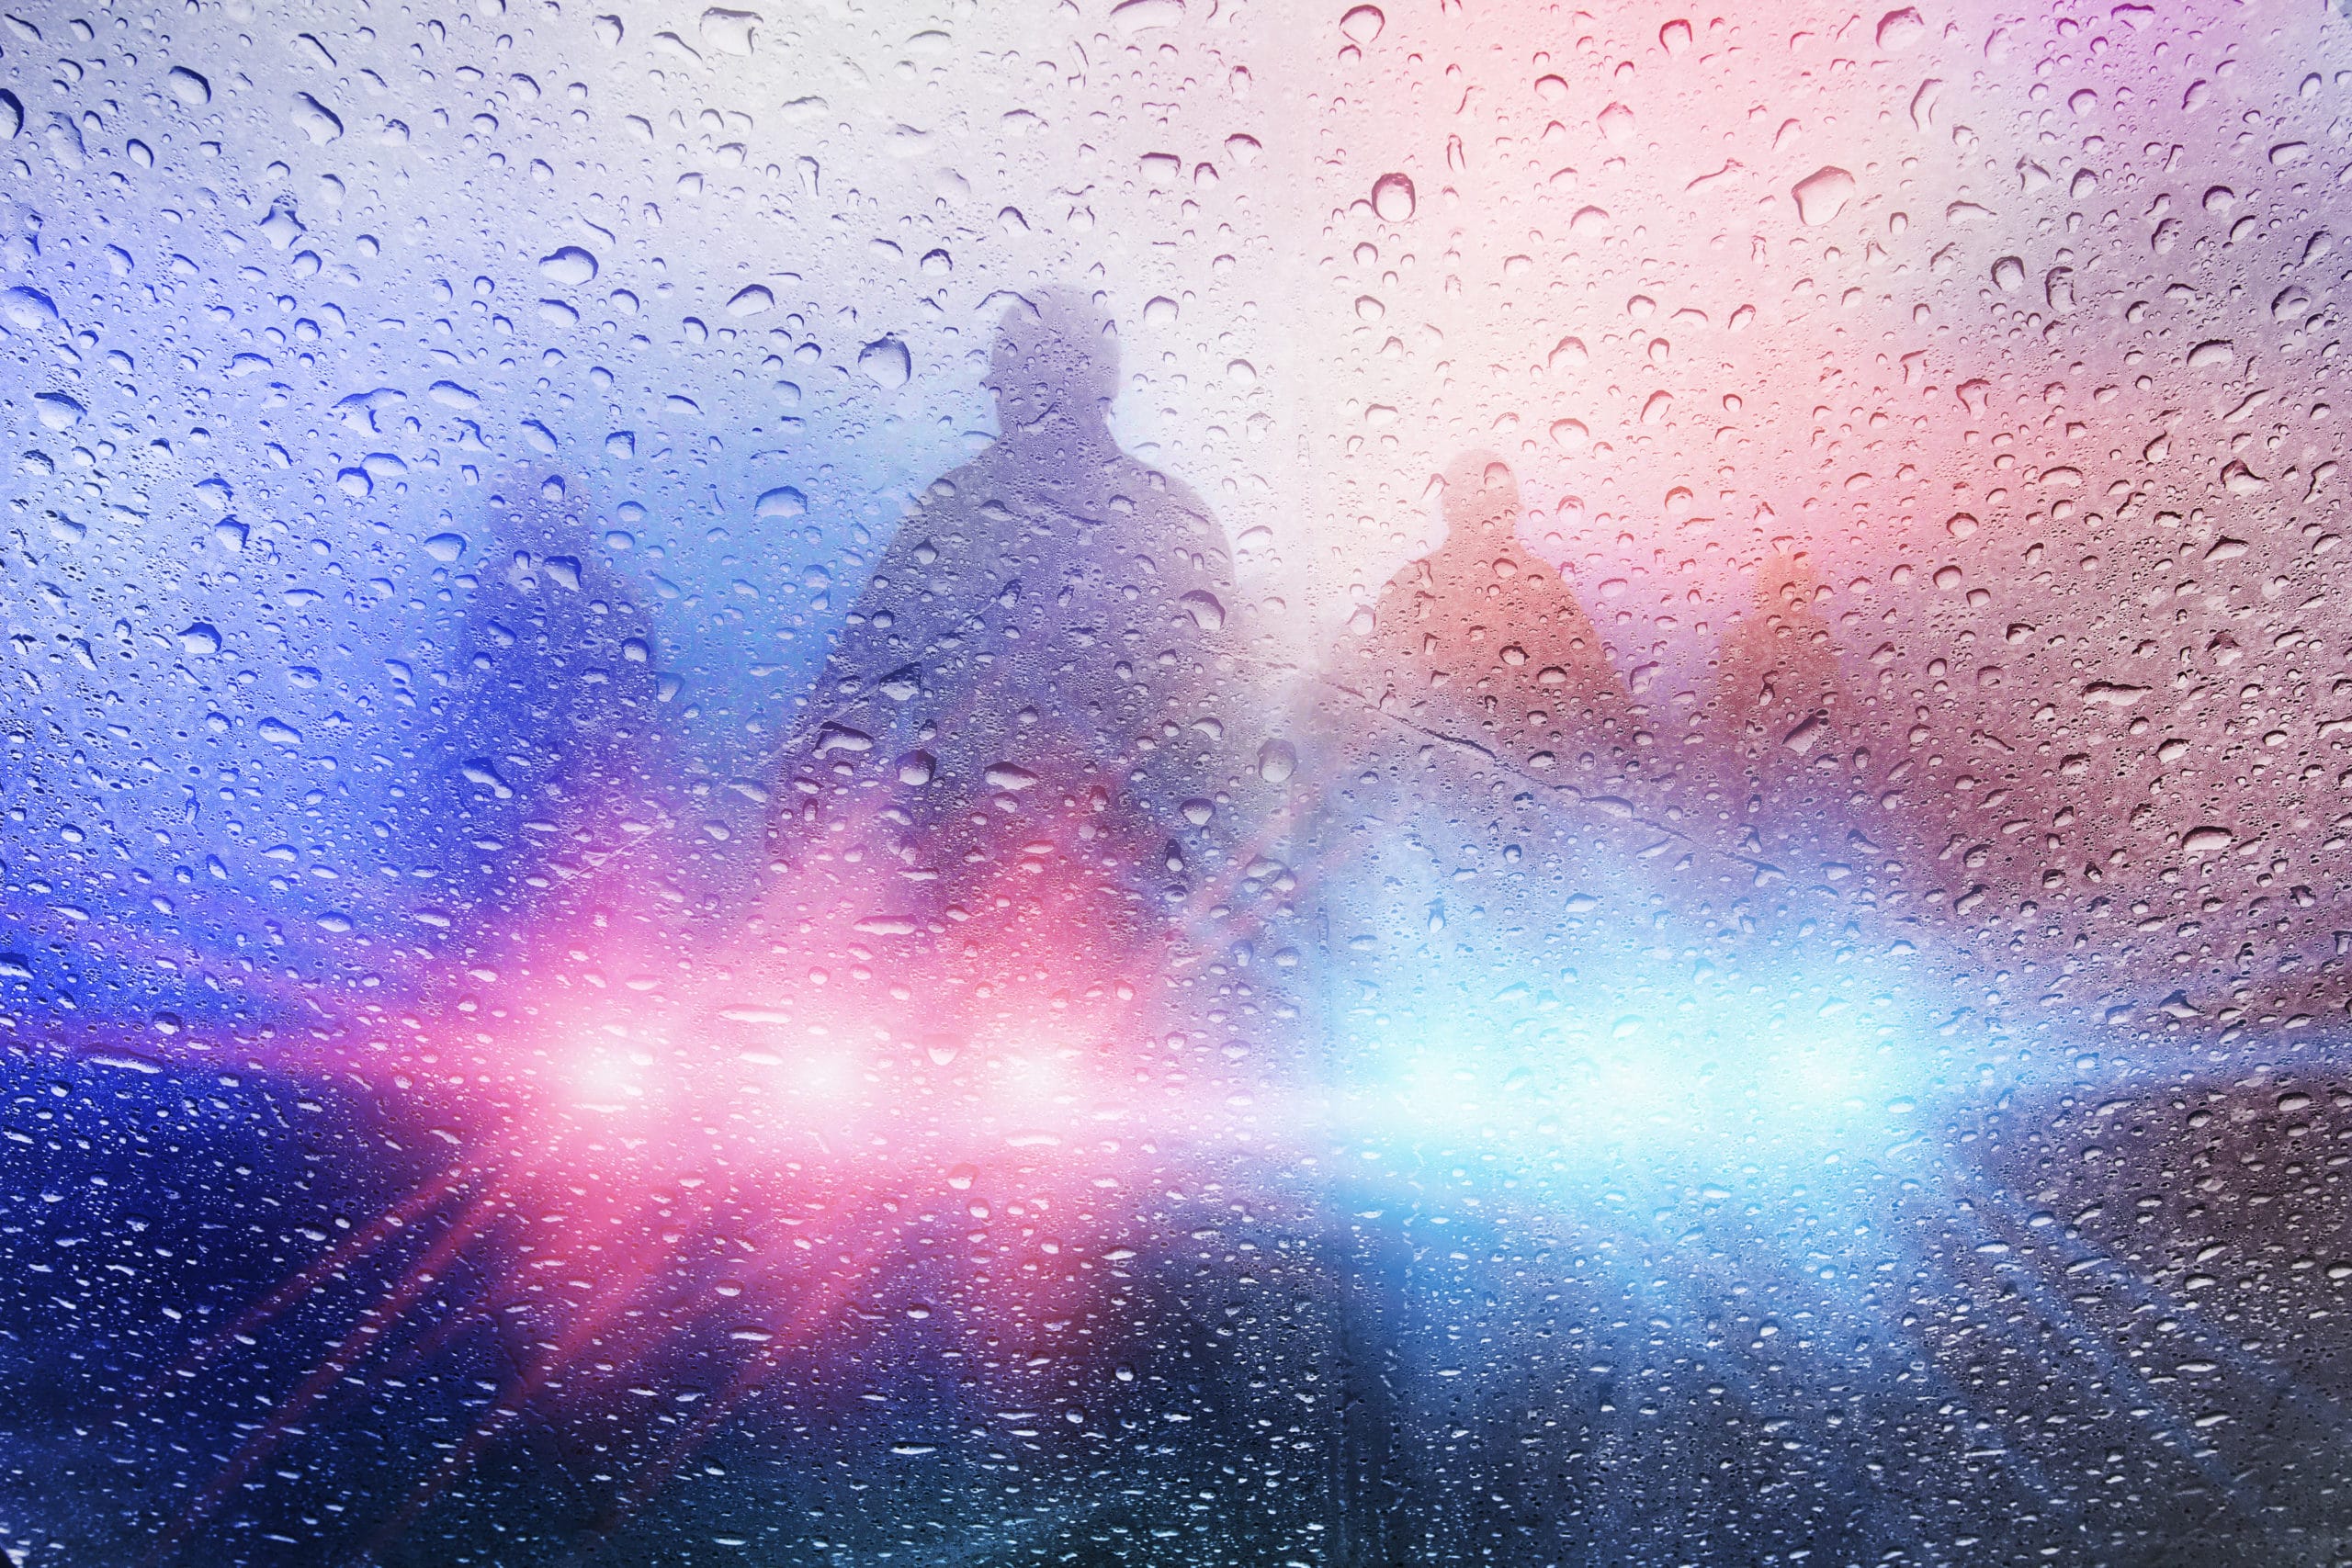 Police,Crime,Scene,,Rain,Background,With,Police,Lights